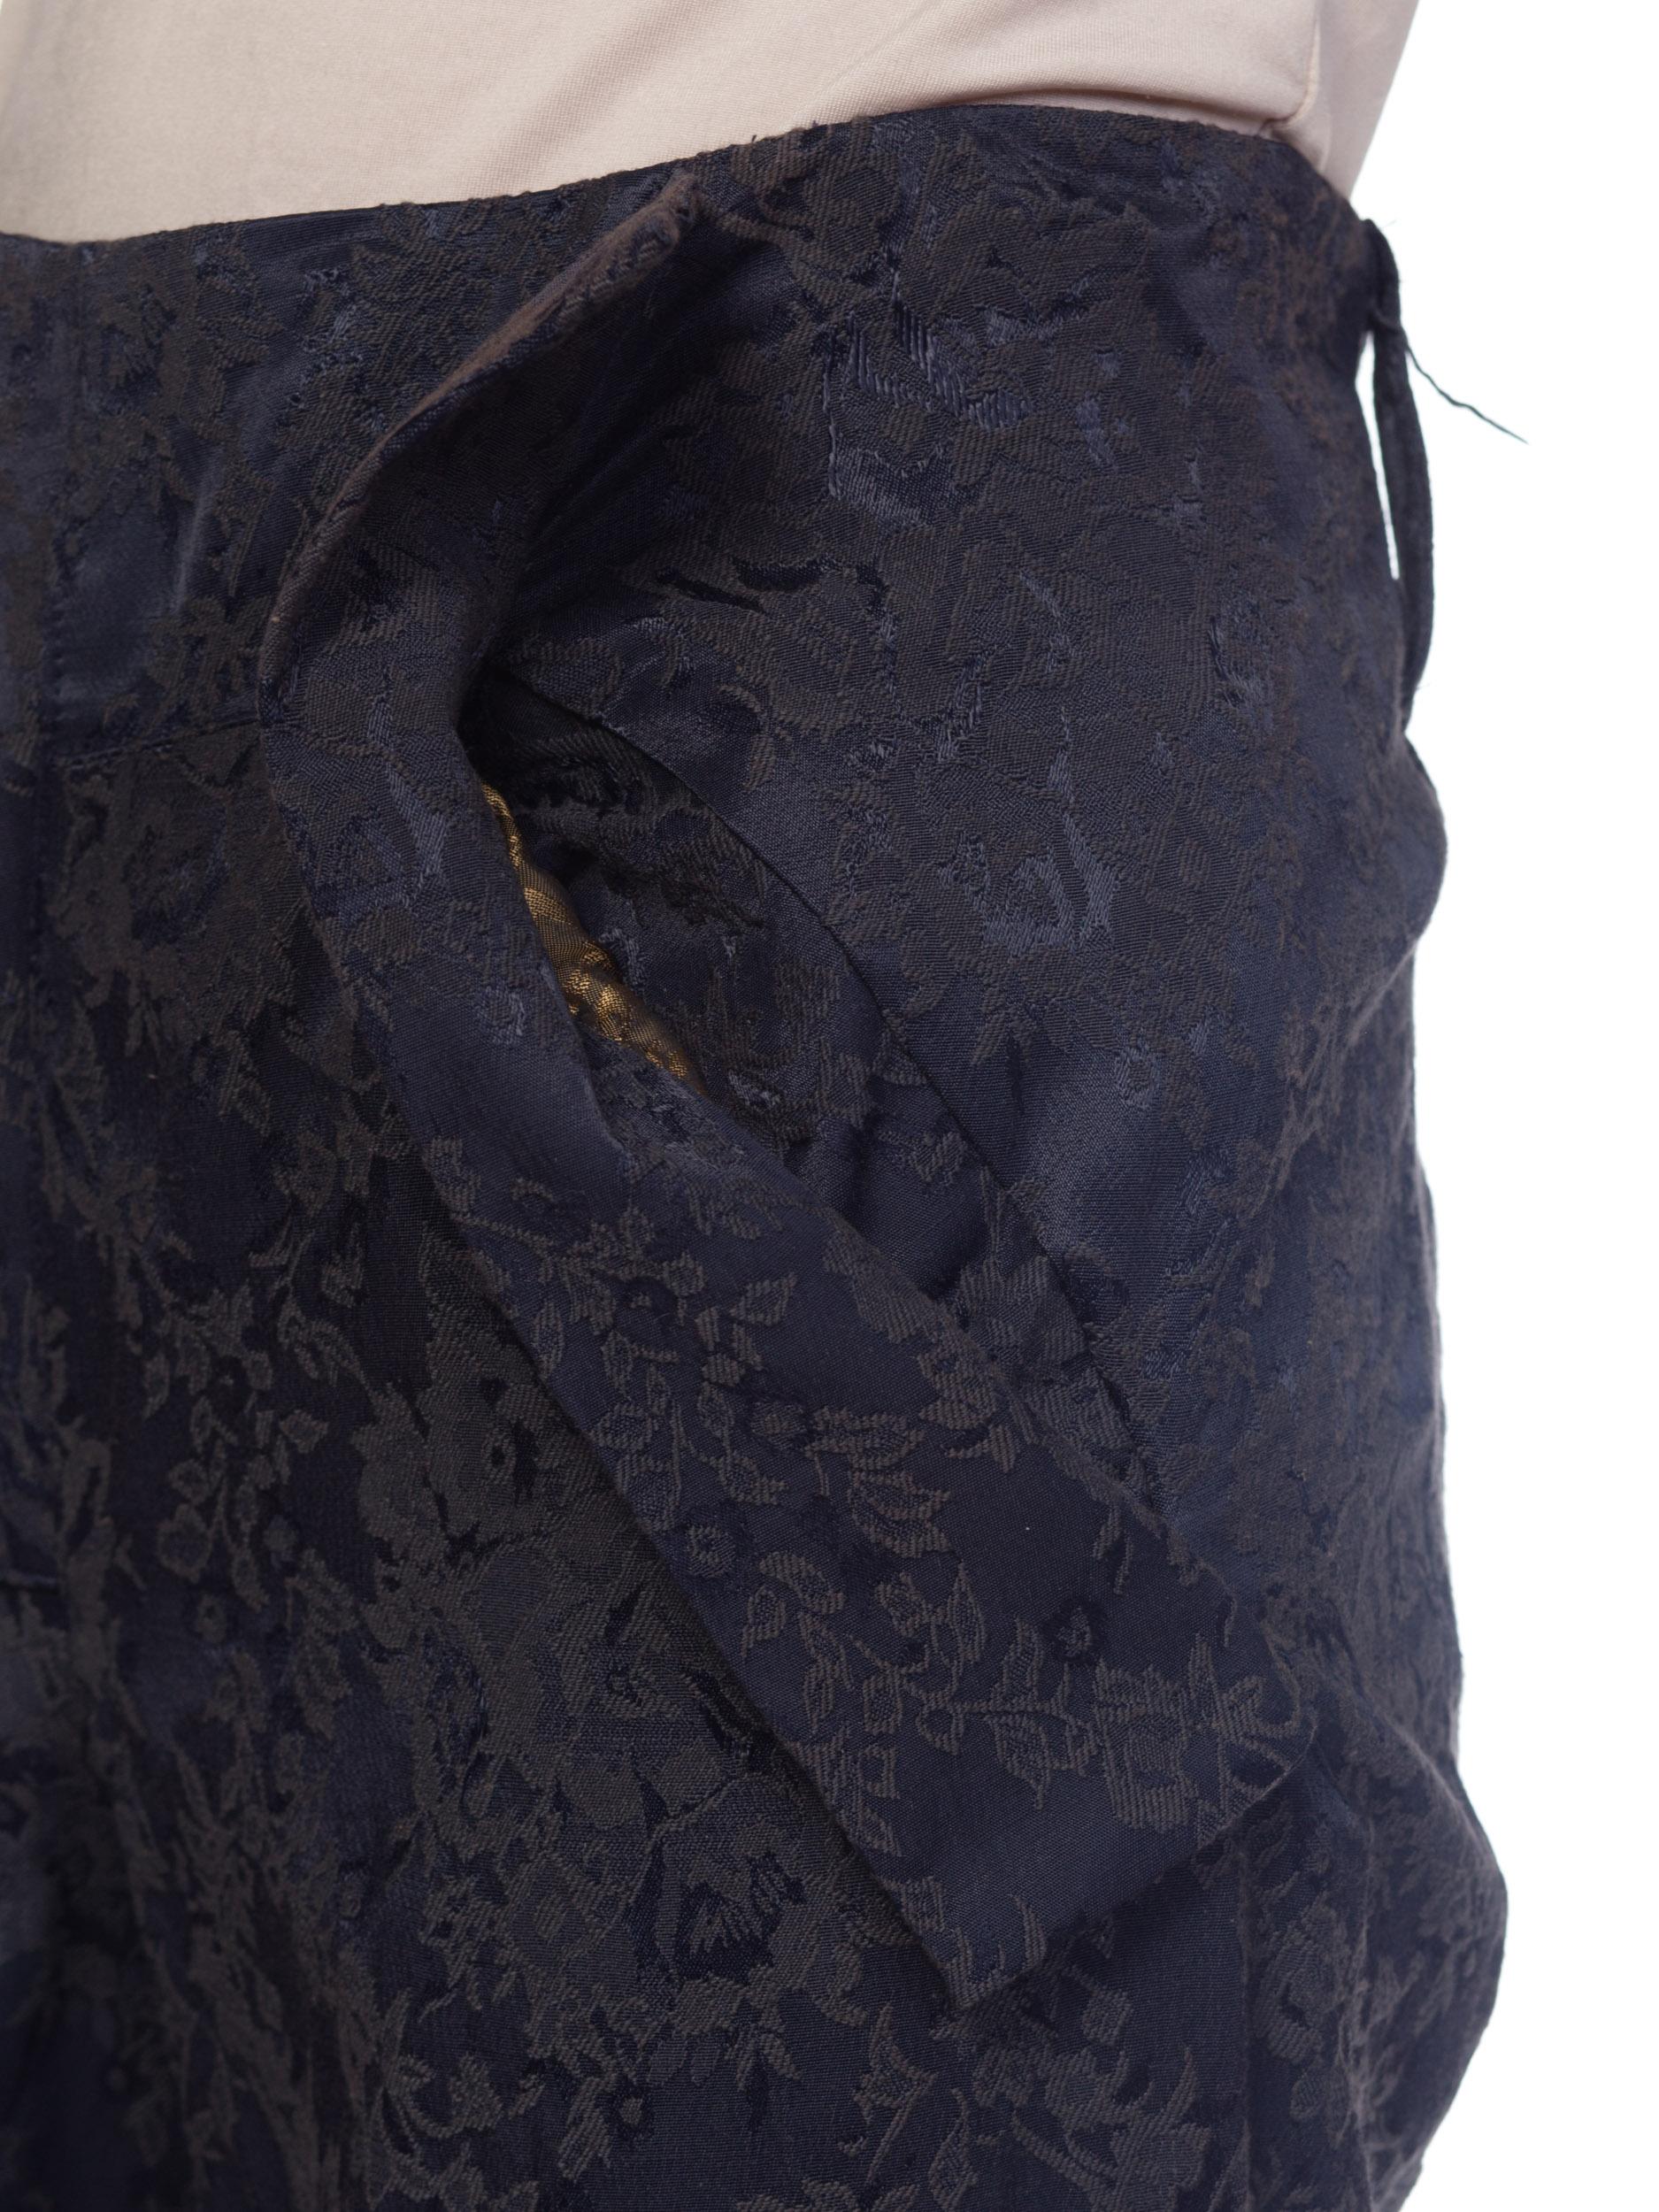 Vivienne Westwood Anglomania Floral Jacquard Pants NWT 4